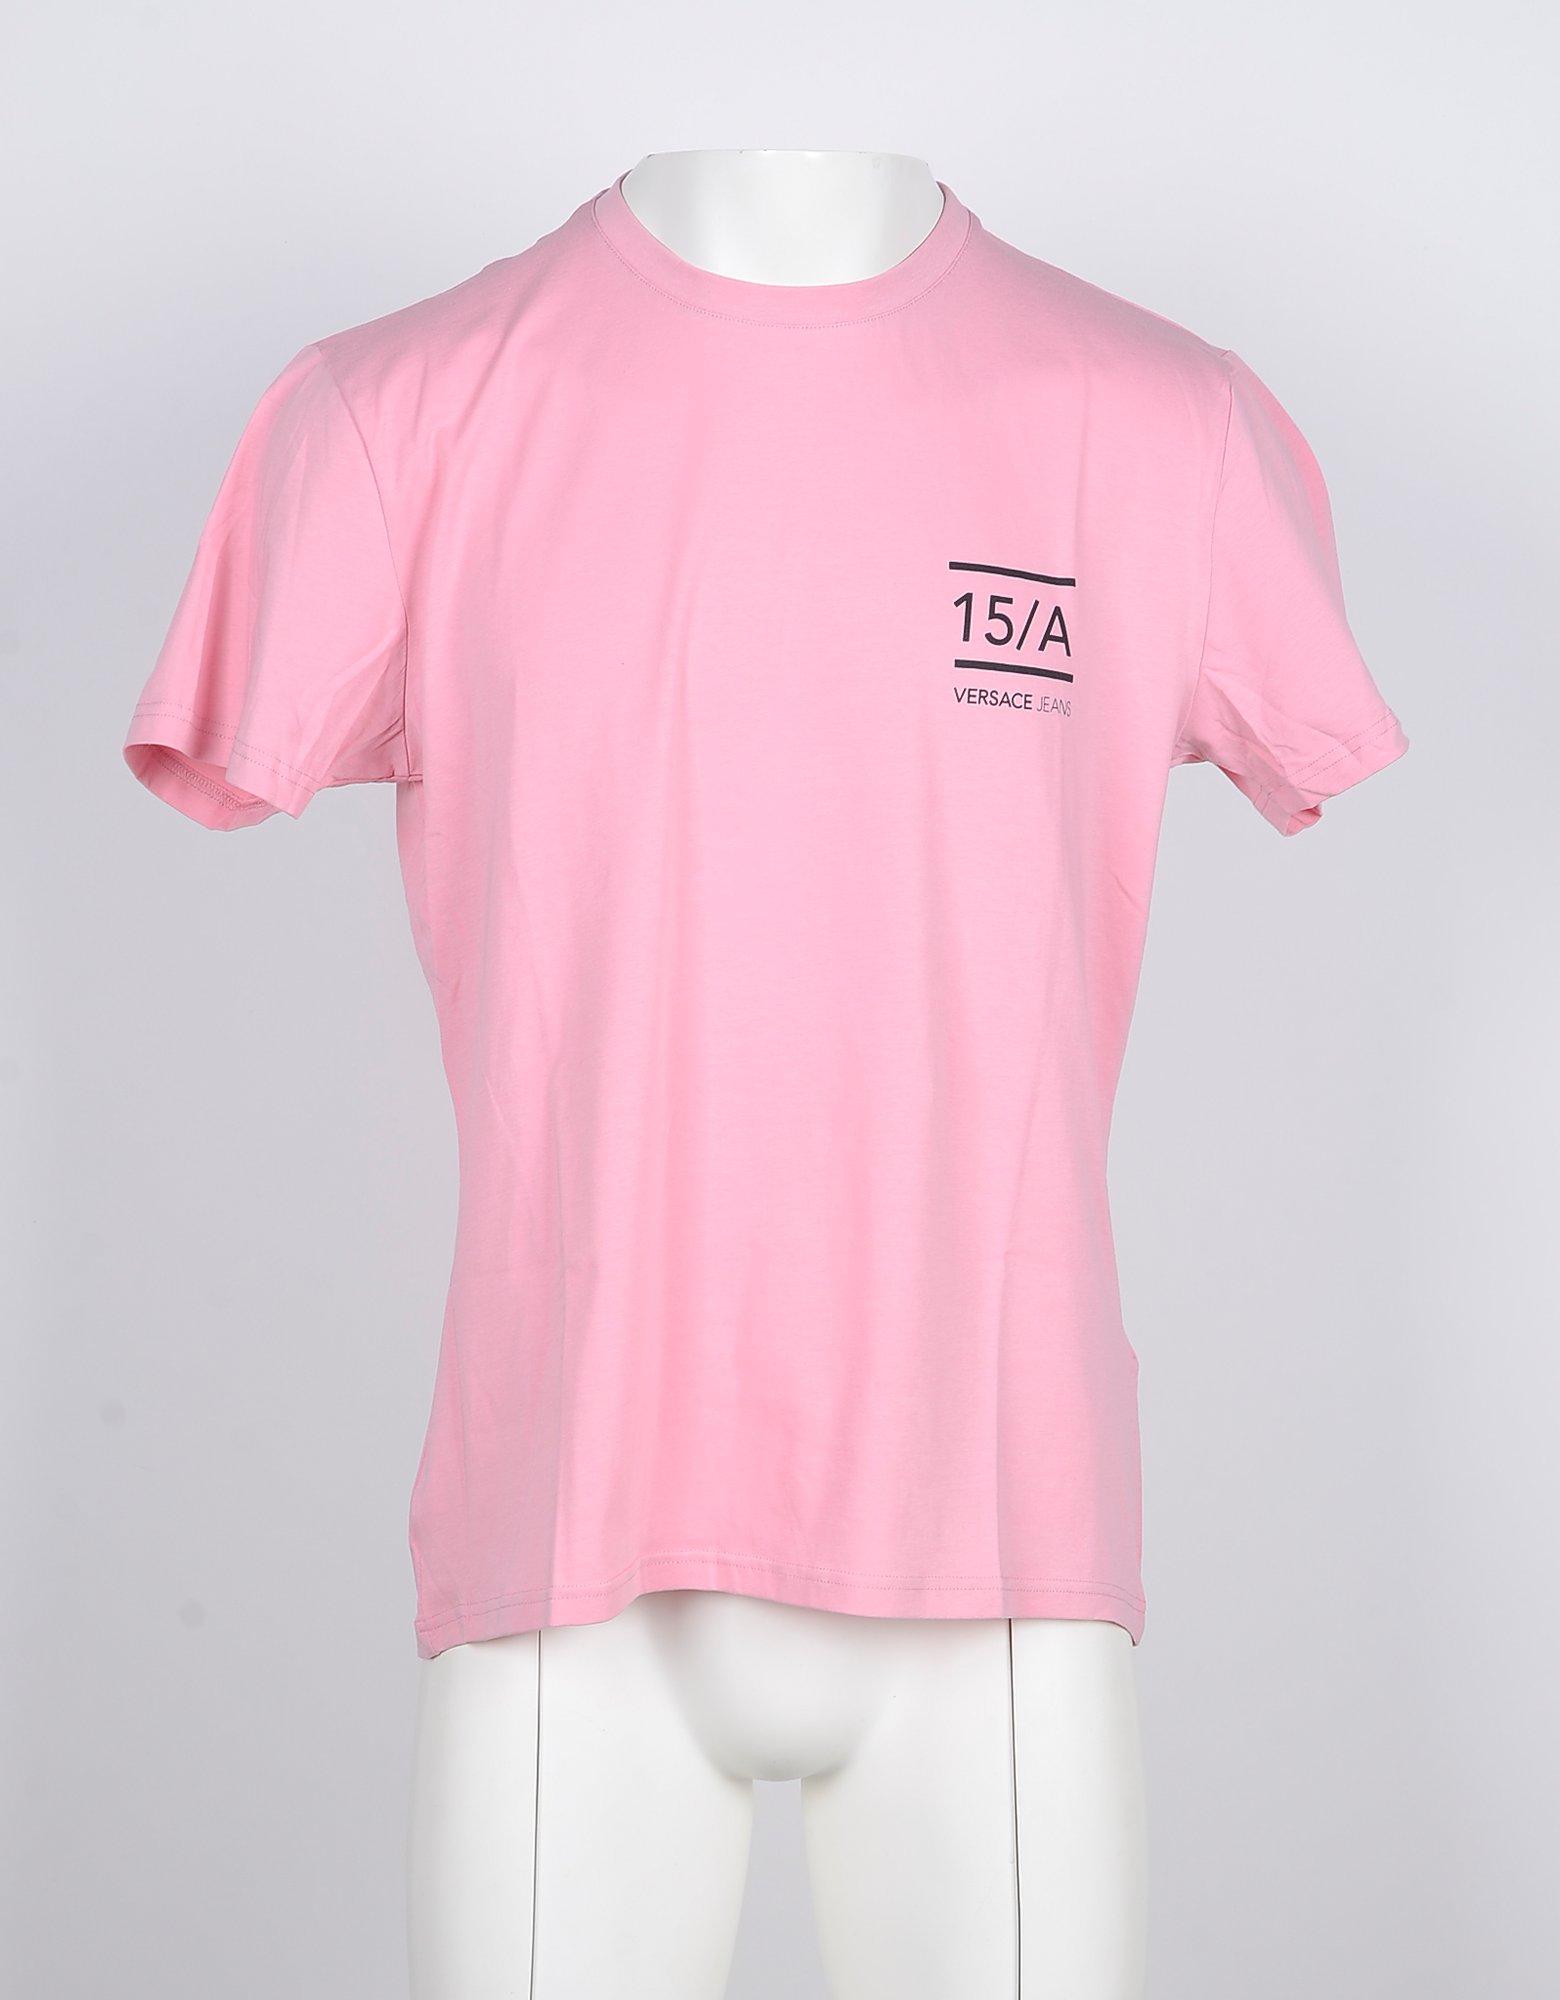 versace pink shirt mens